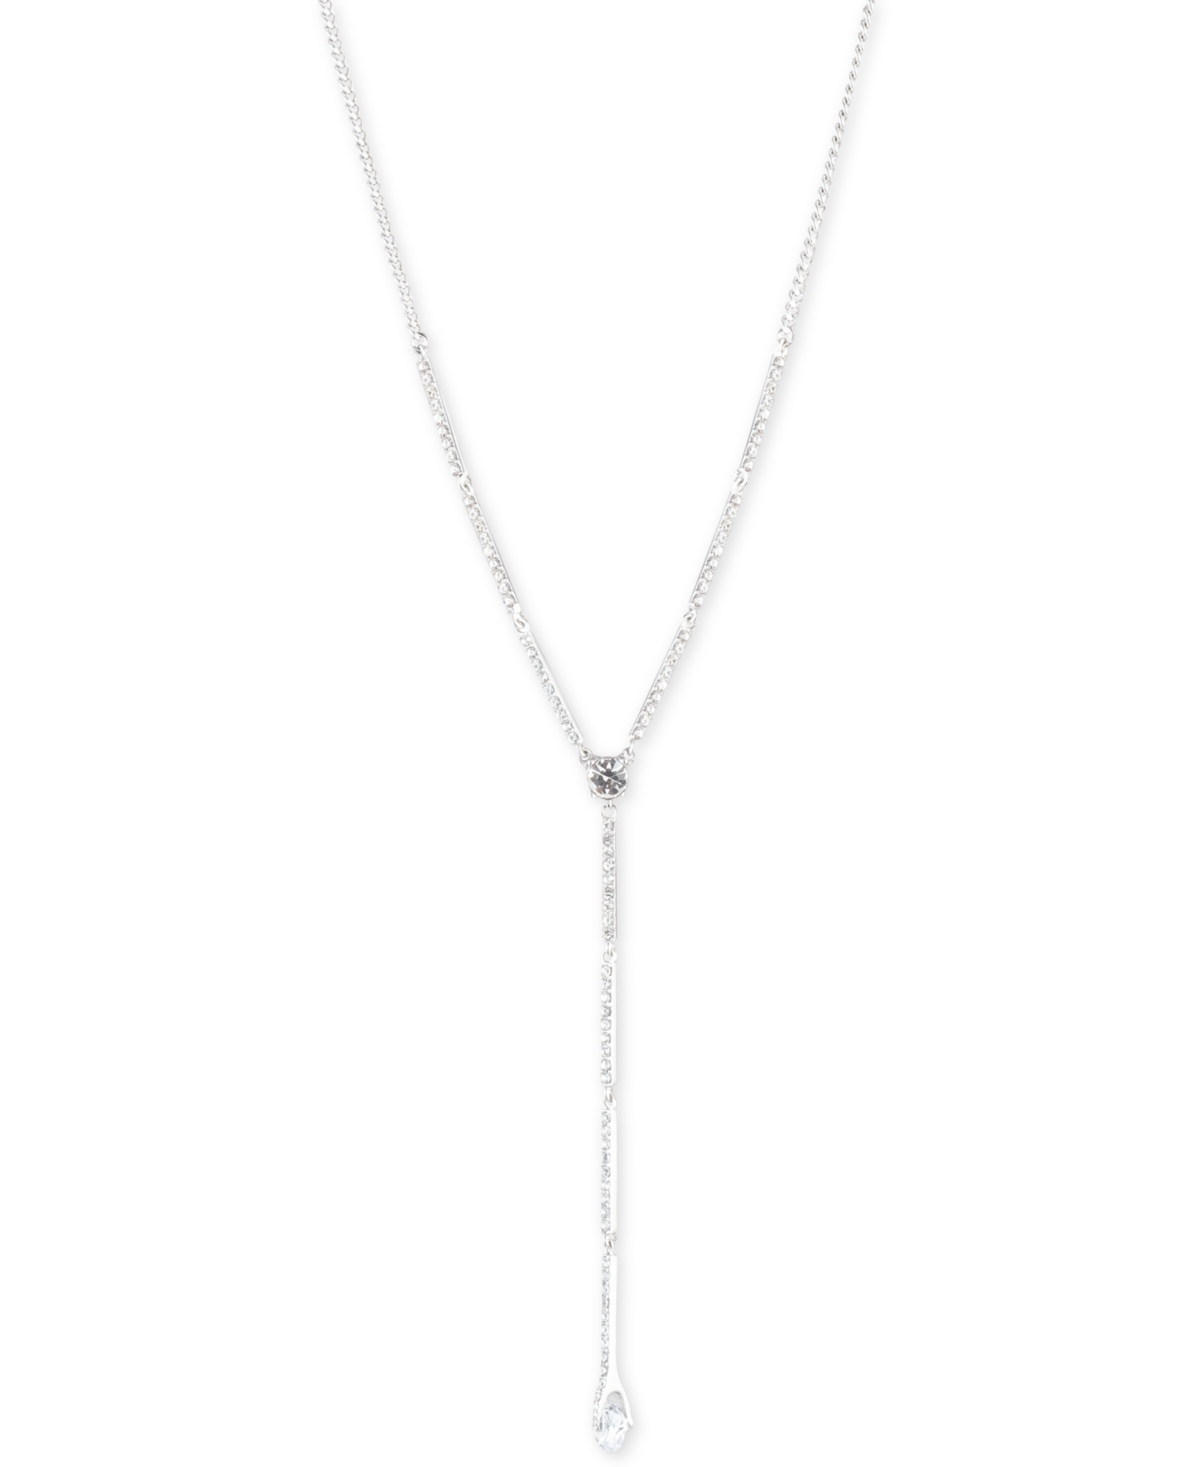 Crystal Lariat Necklace, 16"' + 3" extender - Pink